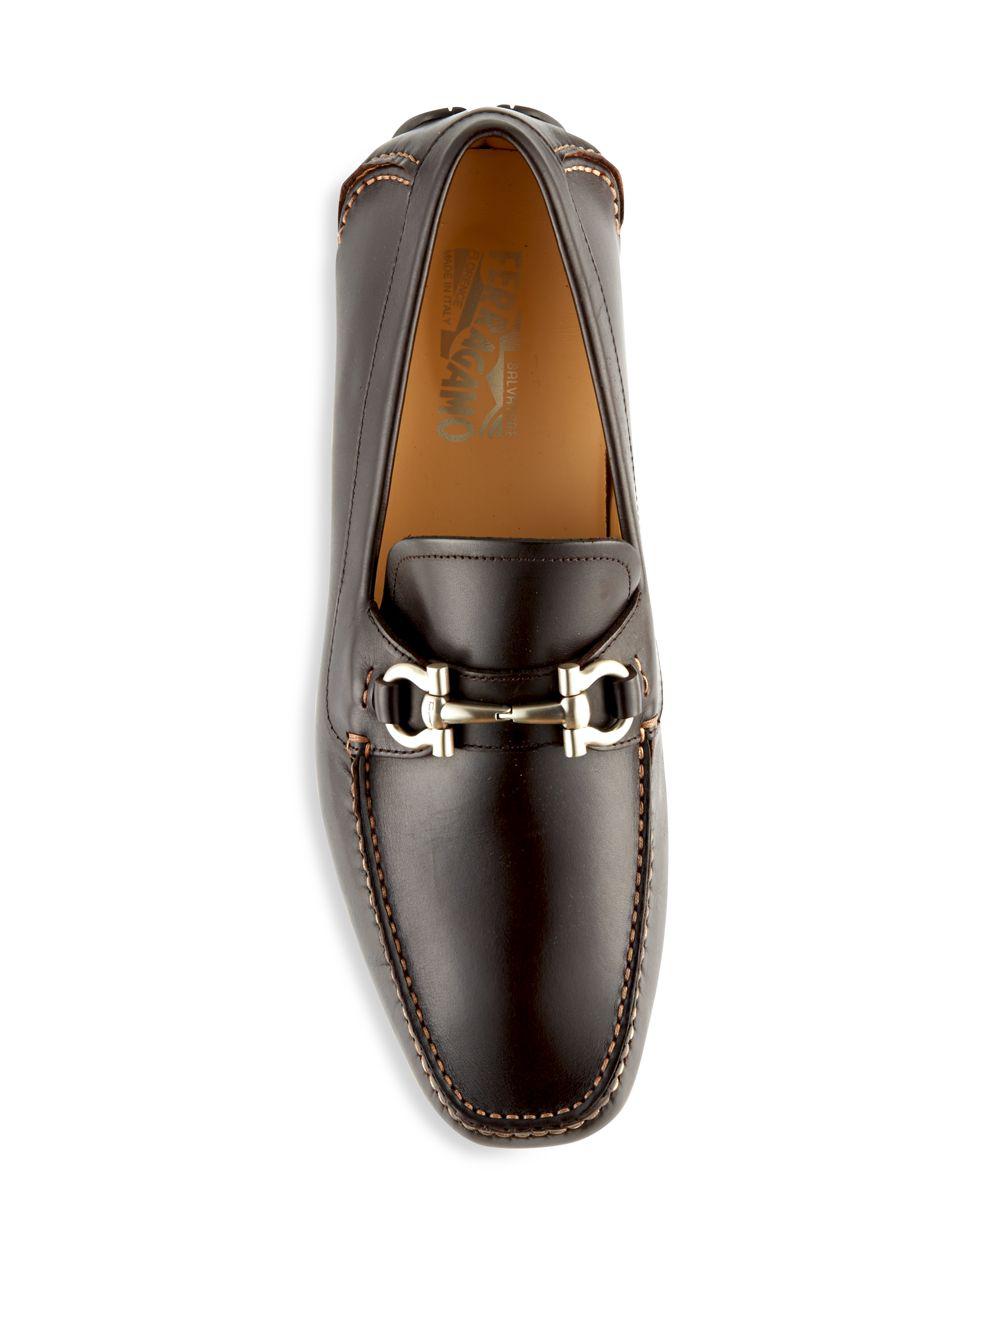 Ferragamo Leather Silvertone Horse-bit Loafers in Brown for Men - Lyst